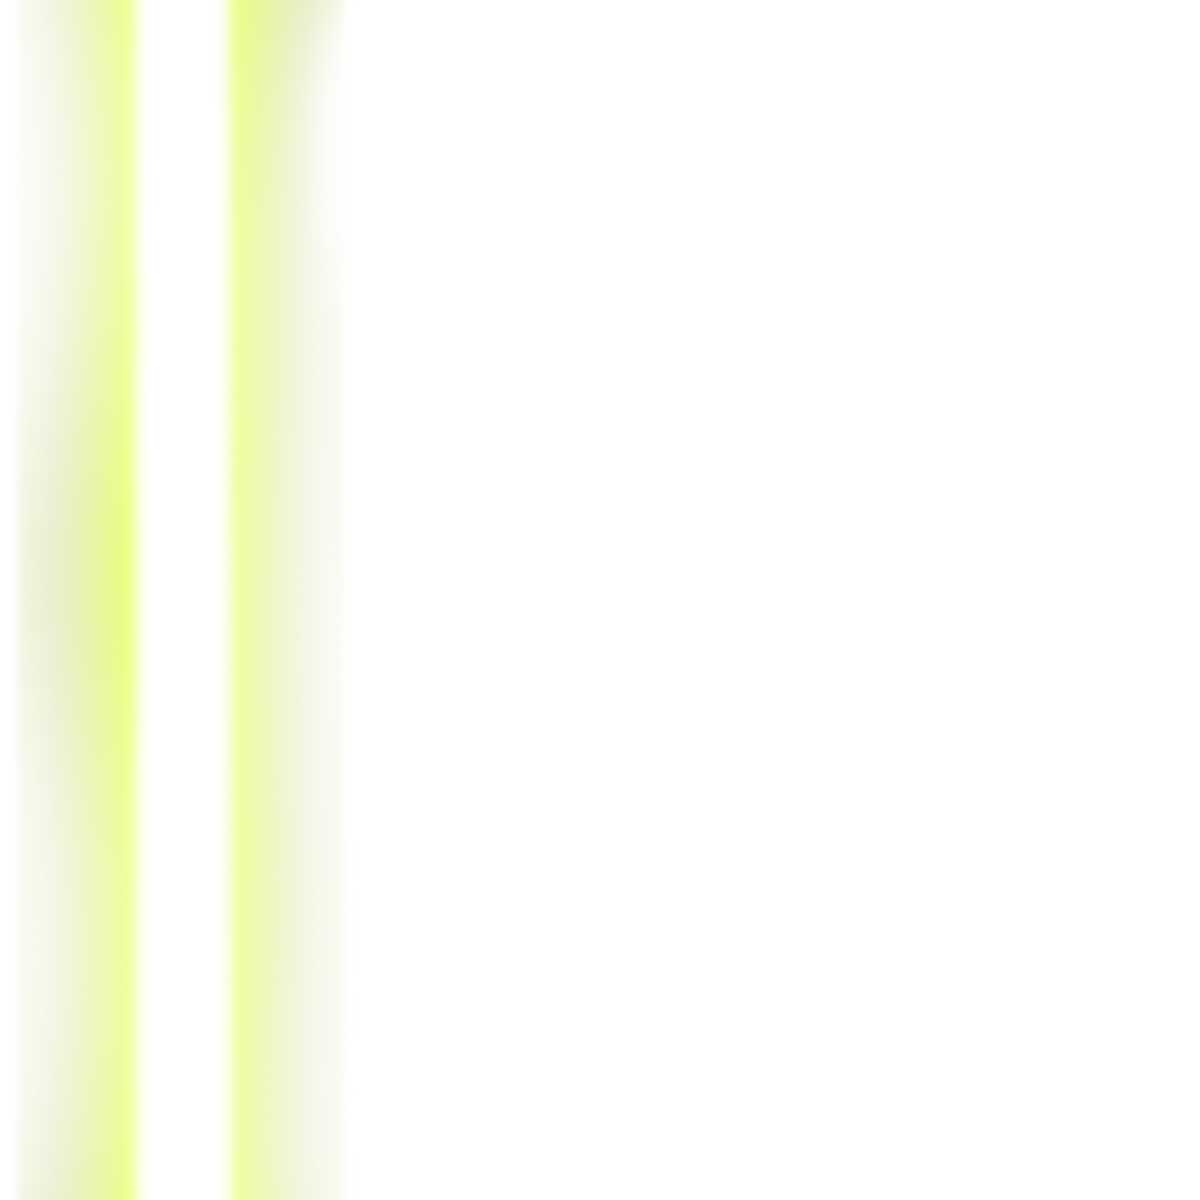 Unofficial Star Wars Yellow Lightsaber Filter